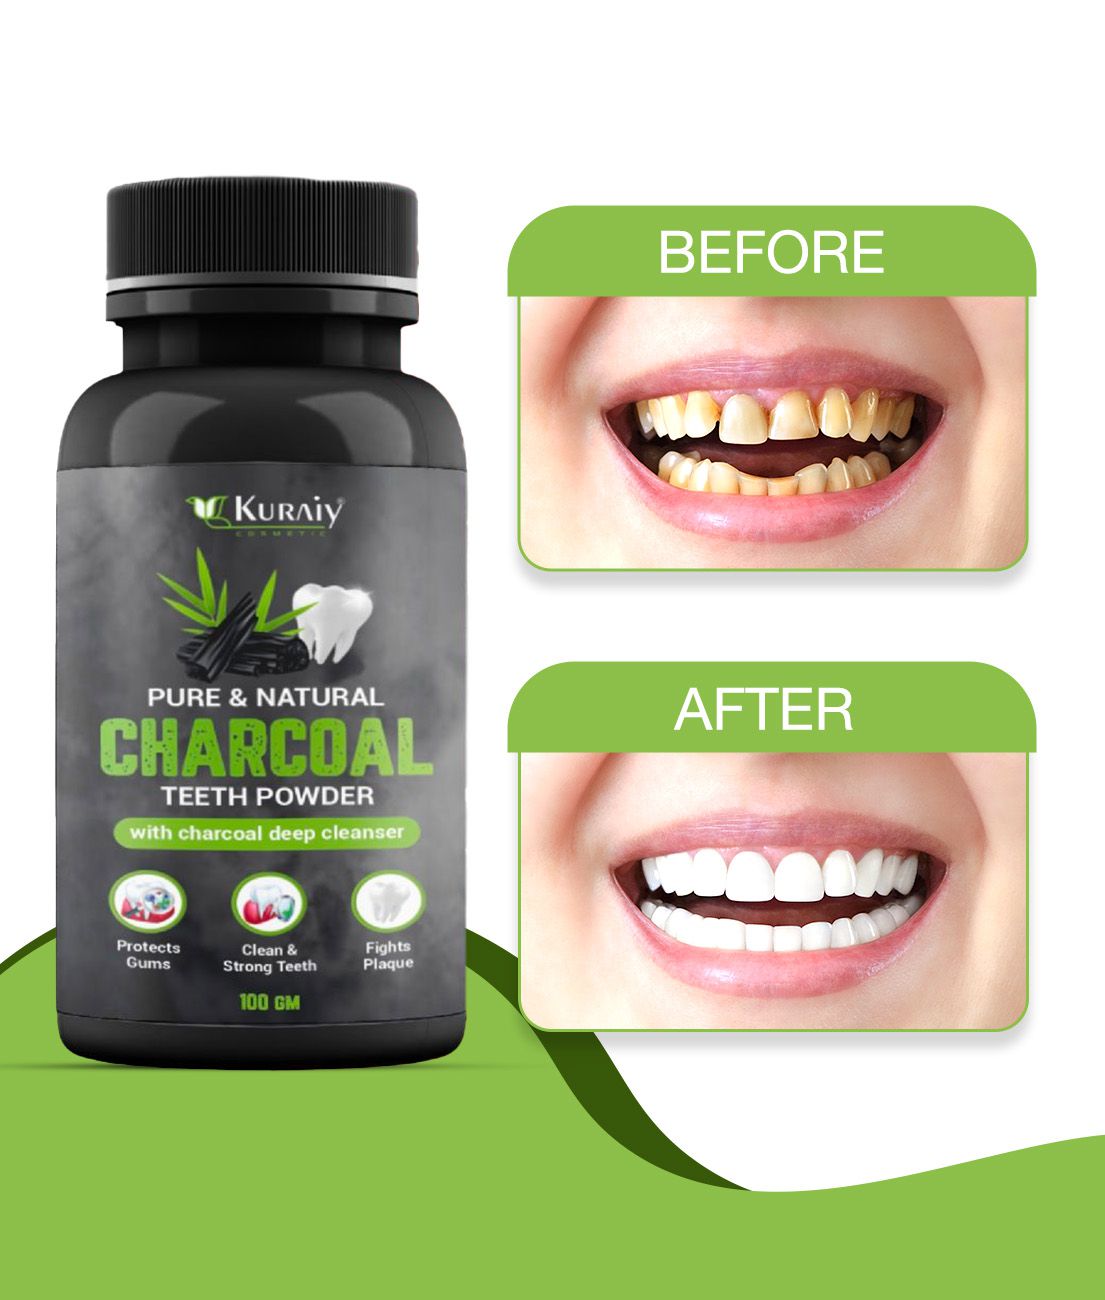     			Kuraiy Real Teeth Whitening Activated Carbon Powder Healthy Harmlessteeth Caring 100G